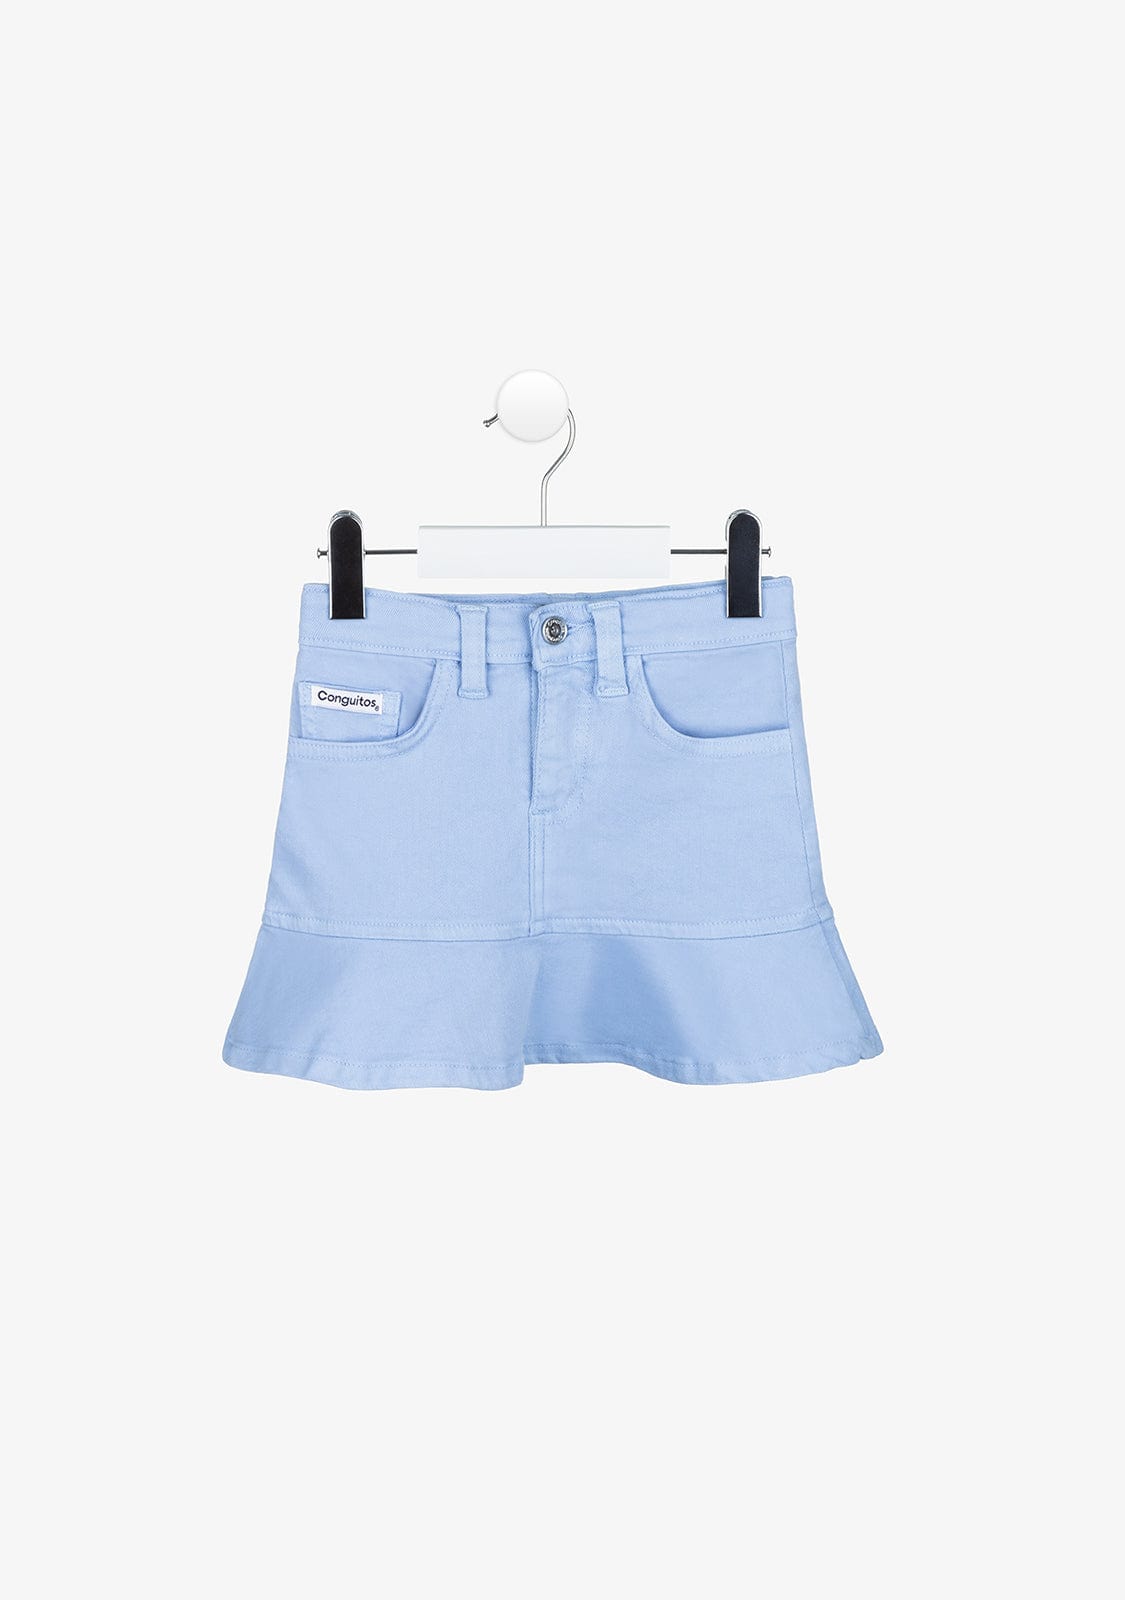 CONGUITOS TEXTIL Clothing Girl's Light Blue Ruffled Skirt